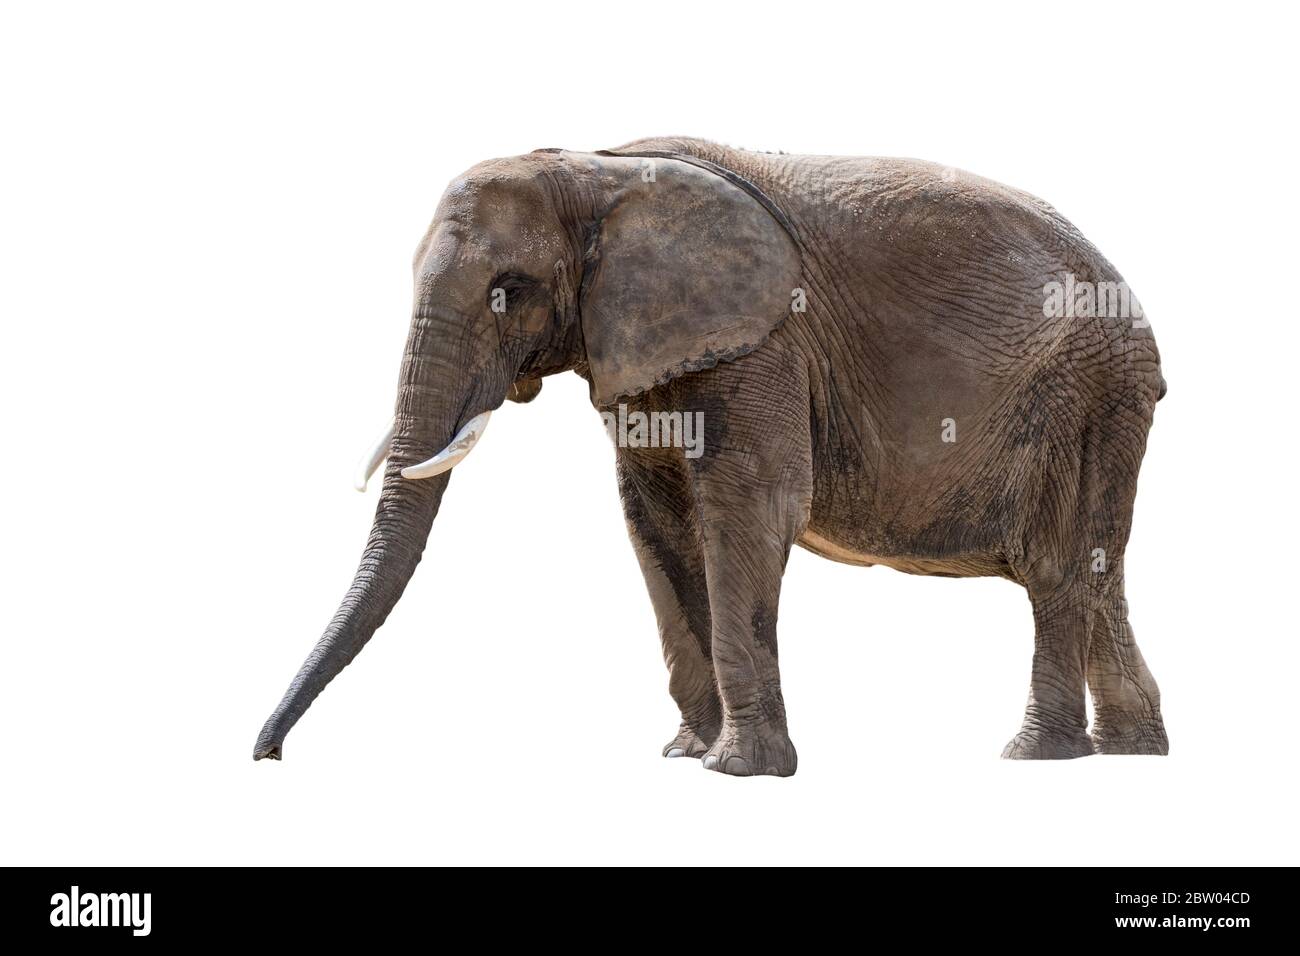 Elefante arbusto africano / elefante sabana africano (Loxodonta africana) sobre fondo blanco Foto de stock